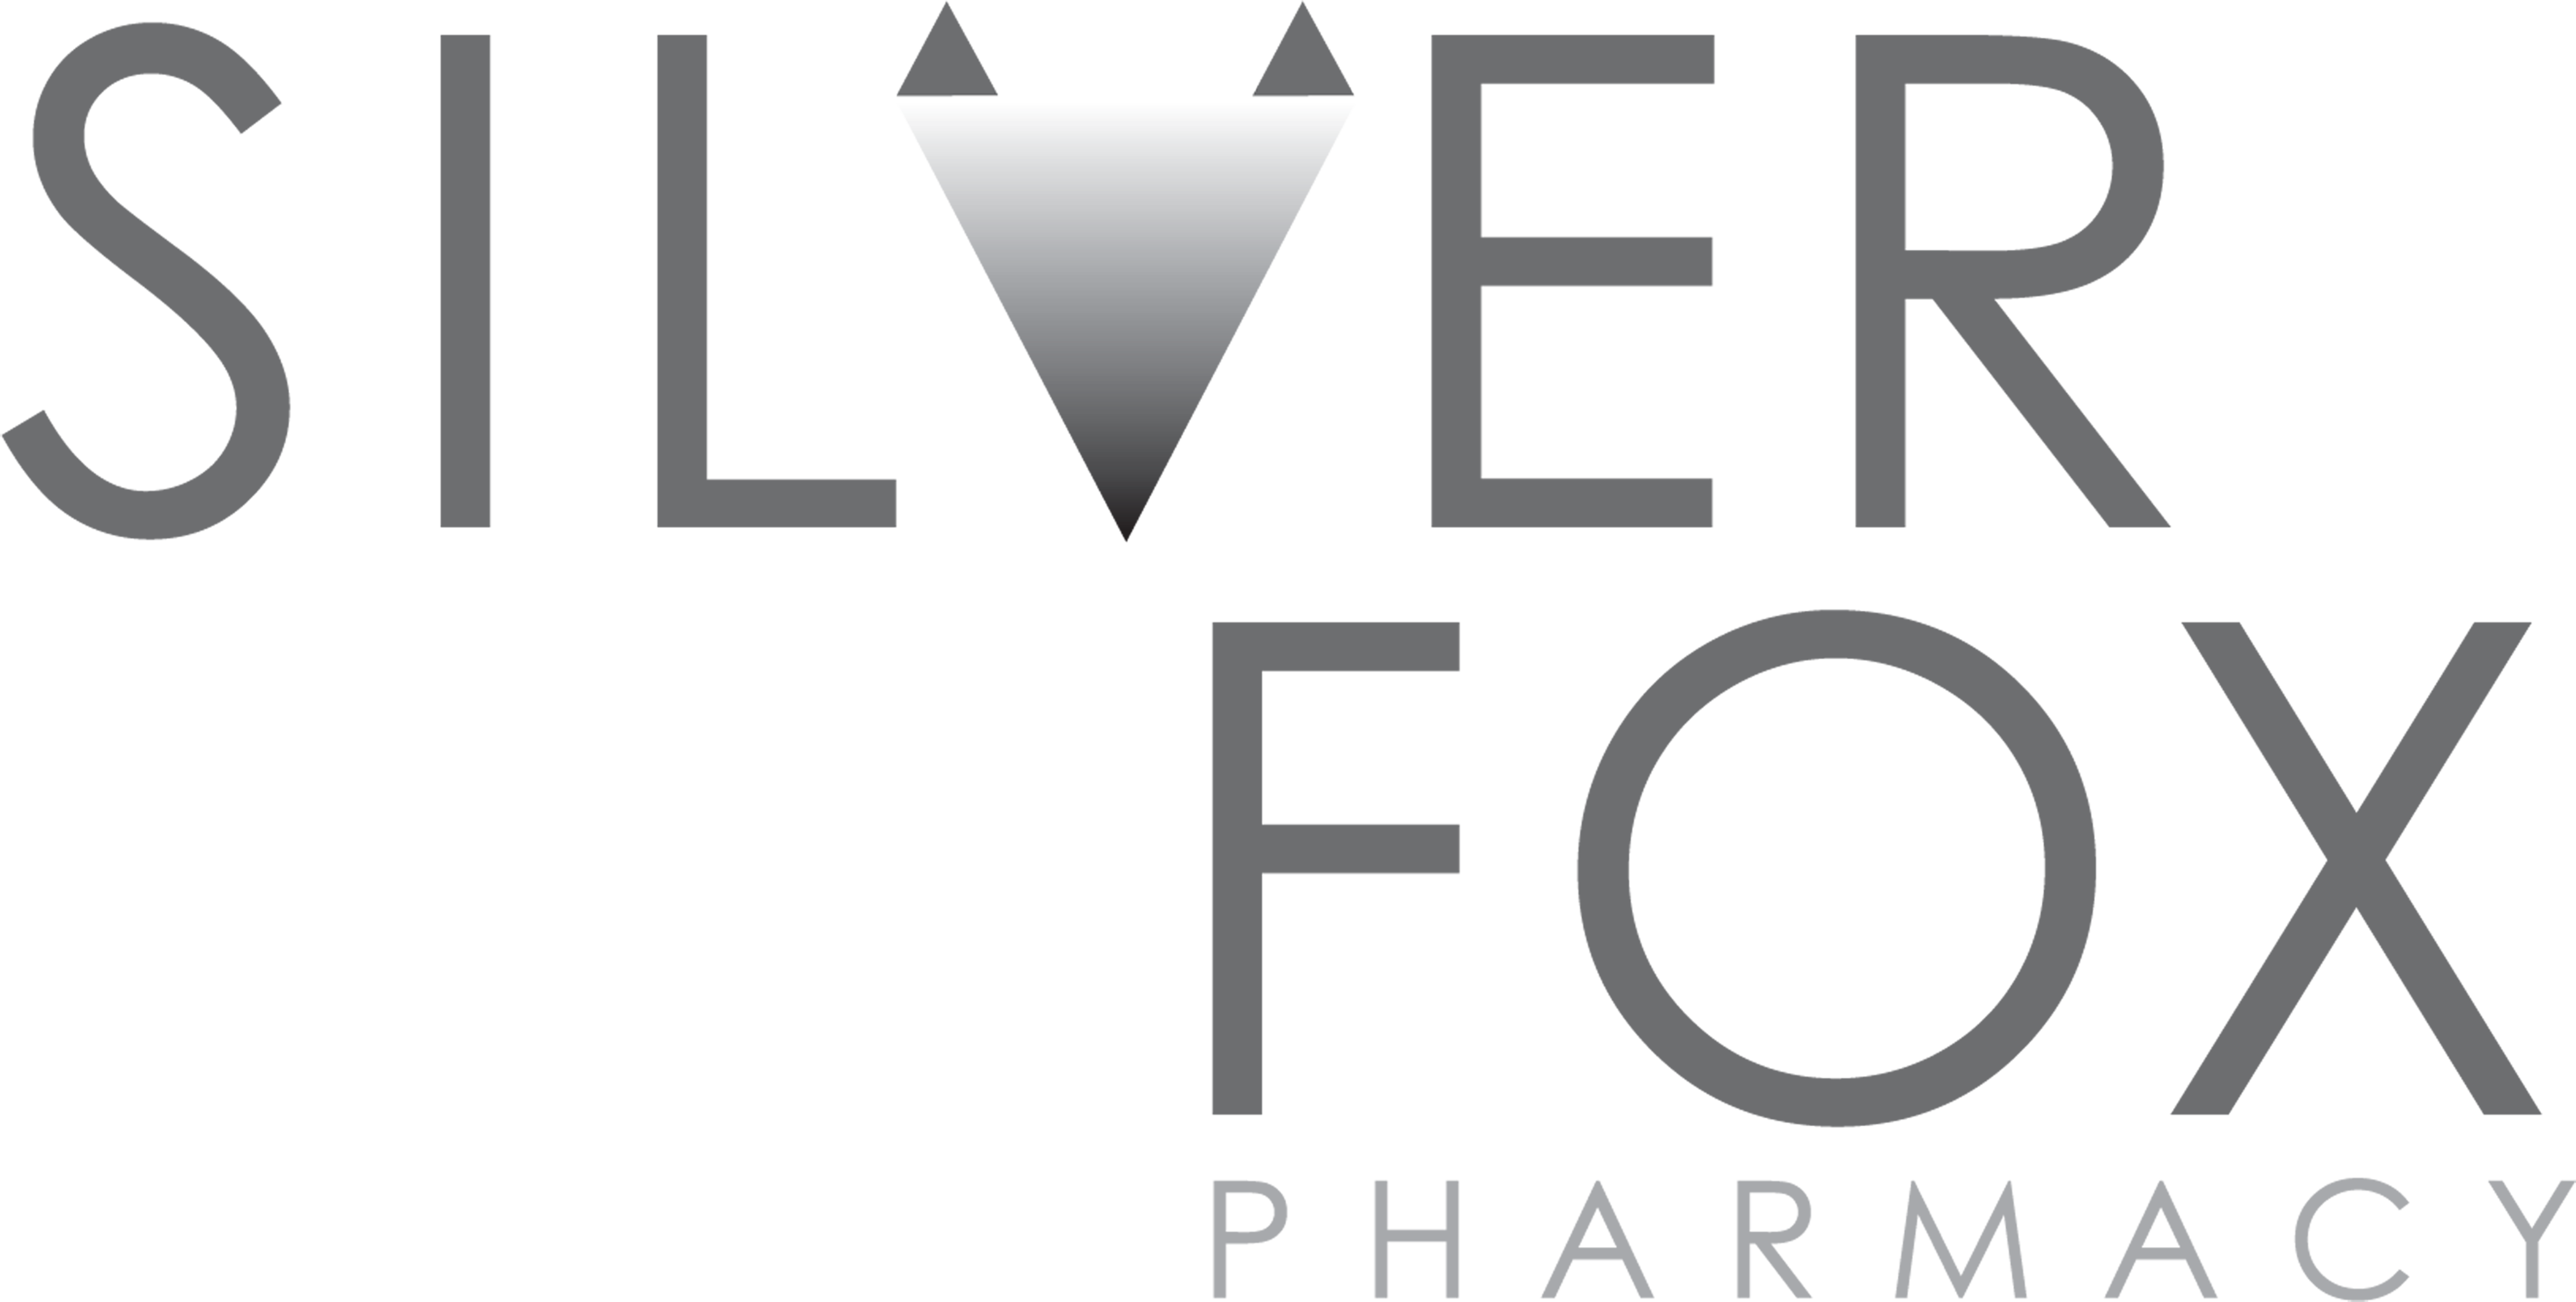 Silver Fox Pharmacy